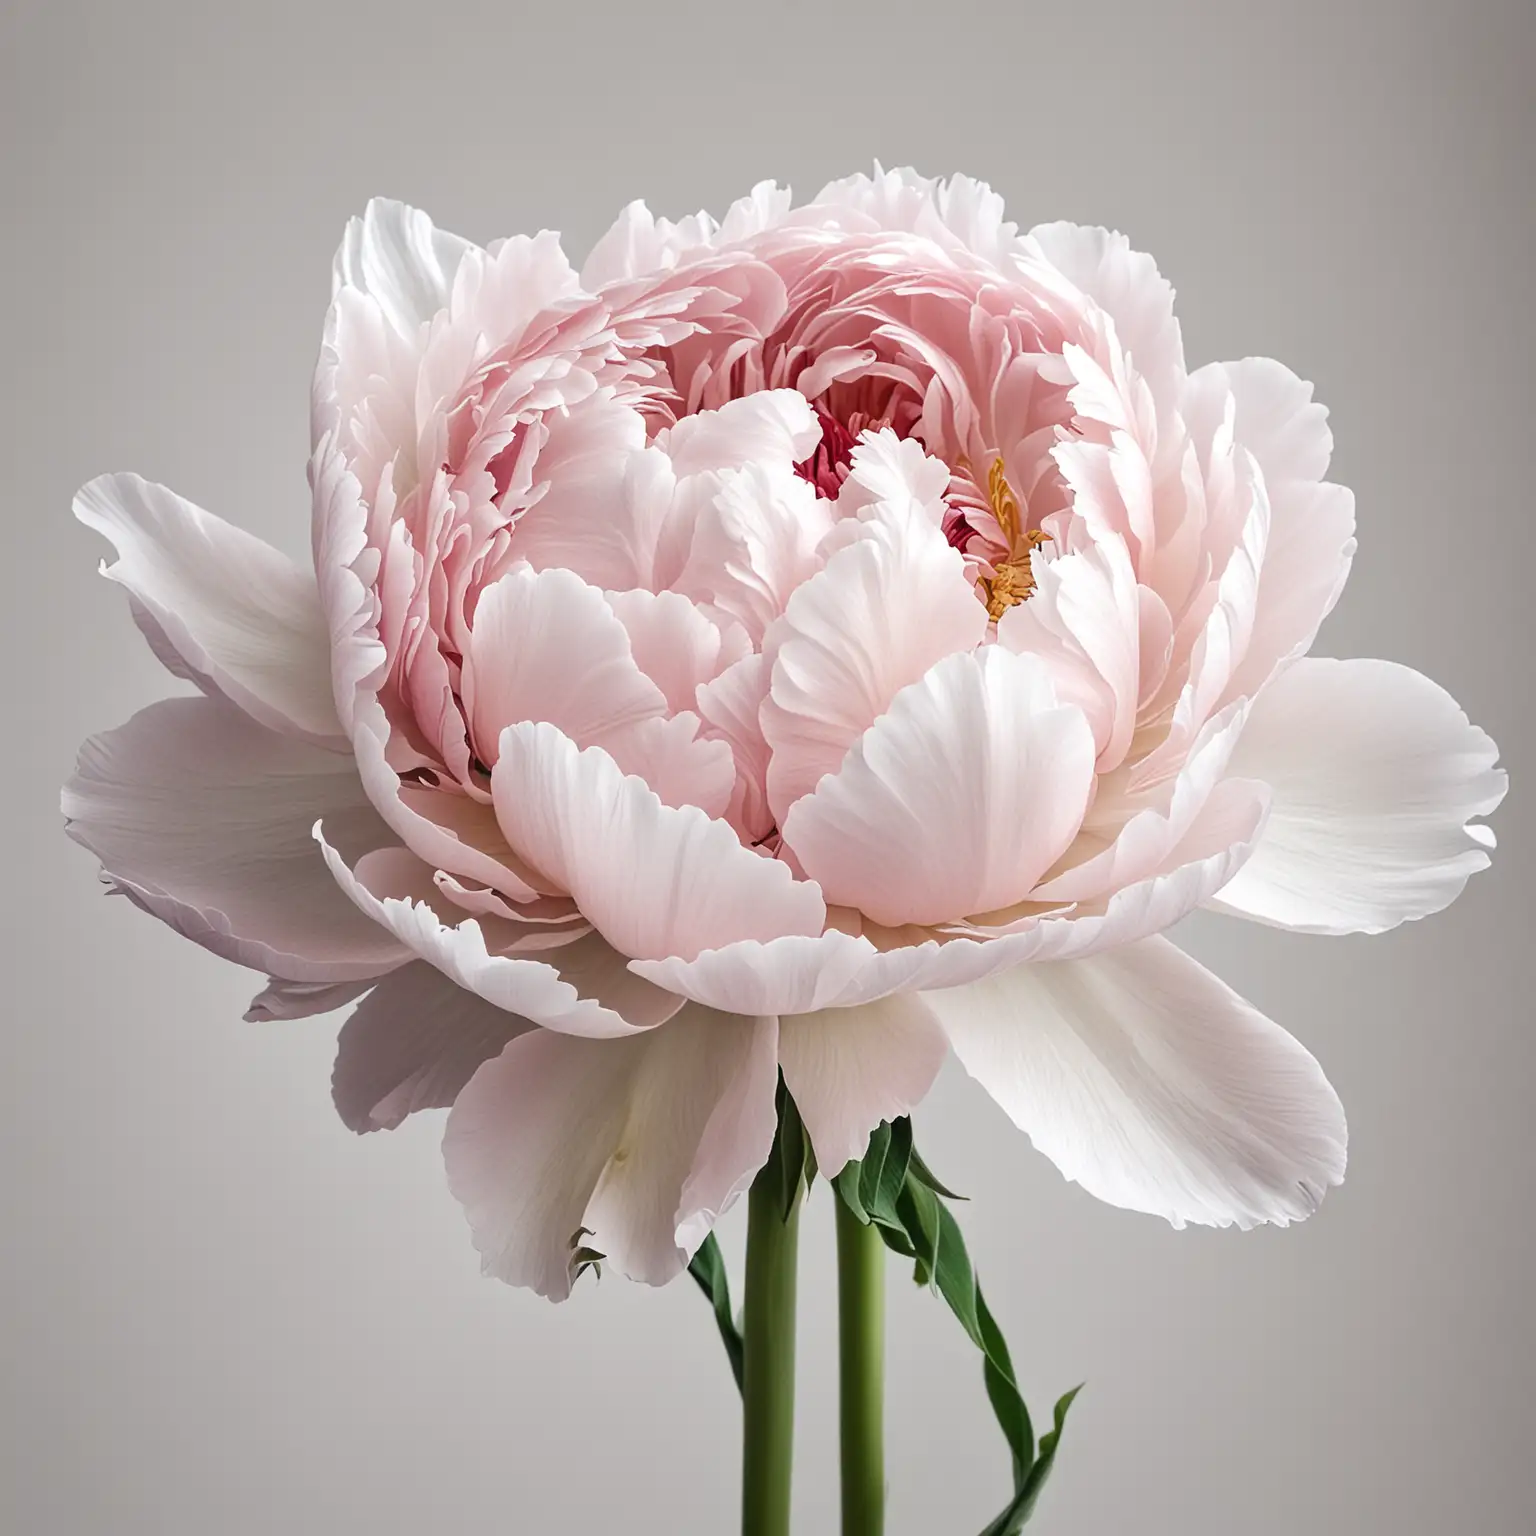 Realistic Cream Peony Flower on White Background